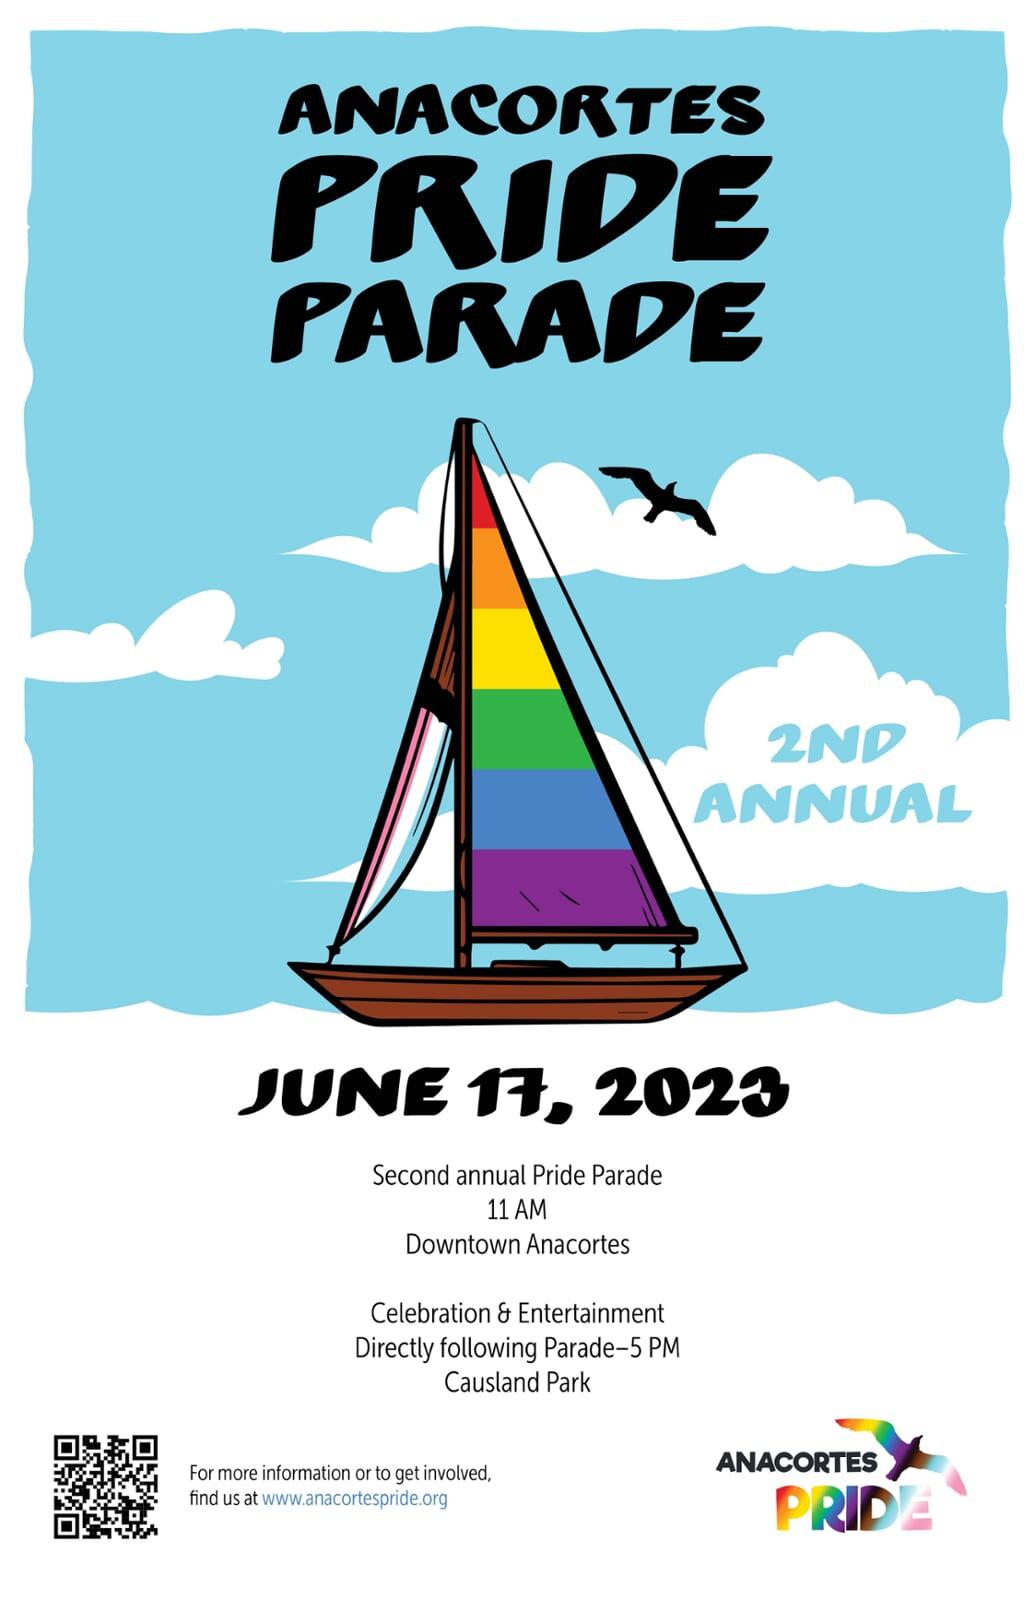 Anacortes Pride Parade and Celebration